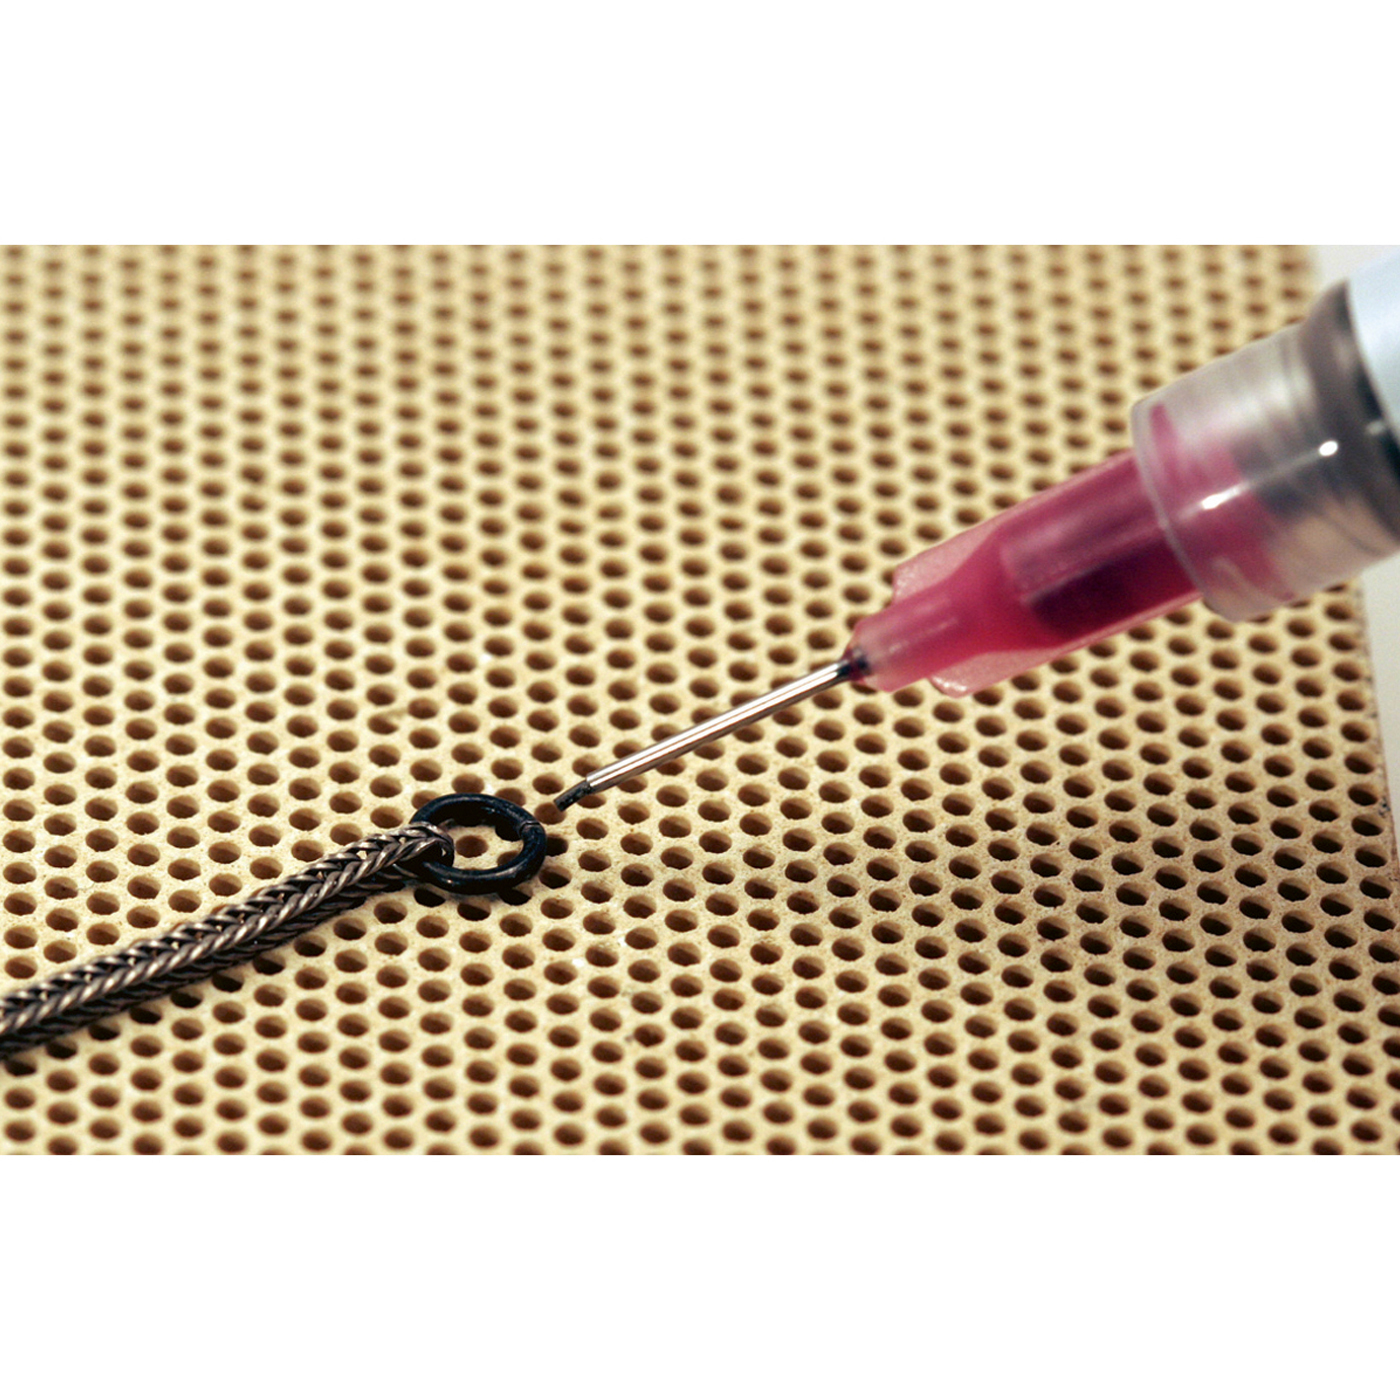 Dosing Needle w. Steel Tip, Pink, ø 0.6 mm, f. Solder Paste - 1 piece